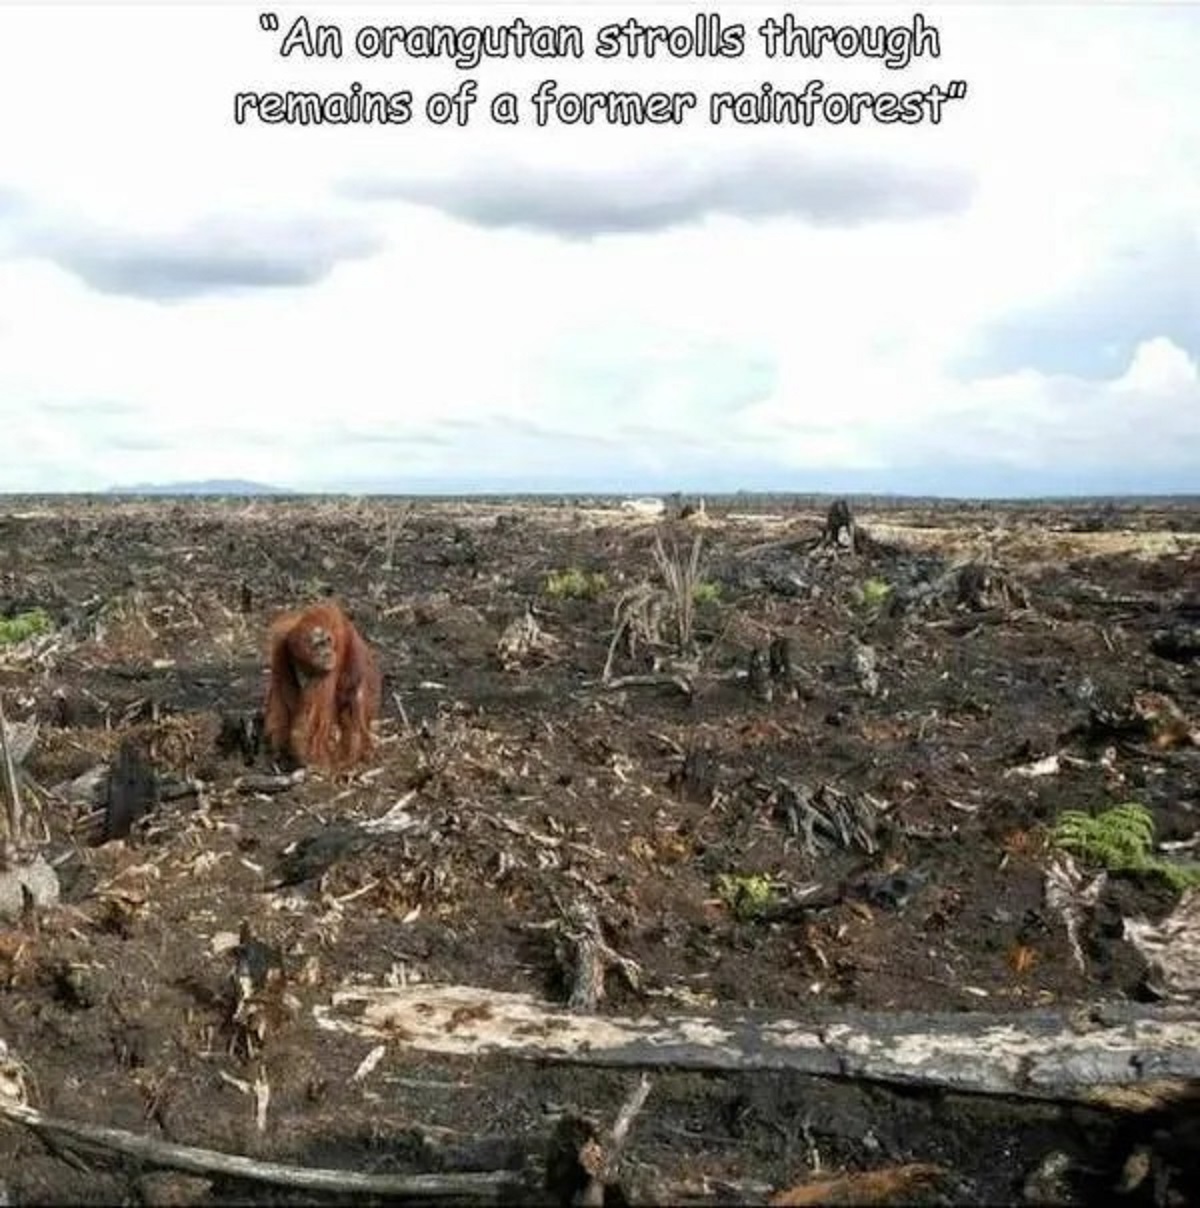 orangutan deforestation - "An orangutan strolls through remains of a former rainforest"